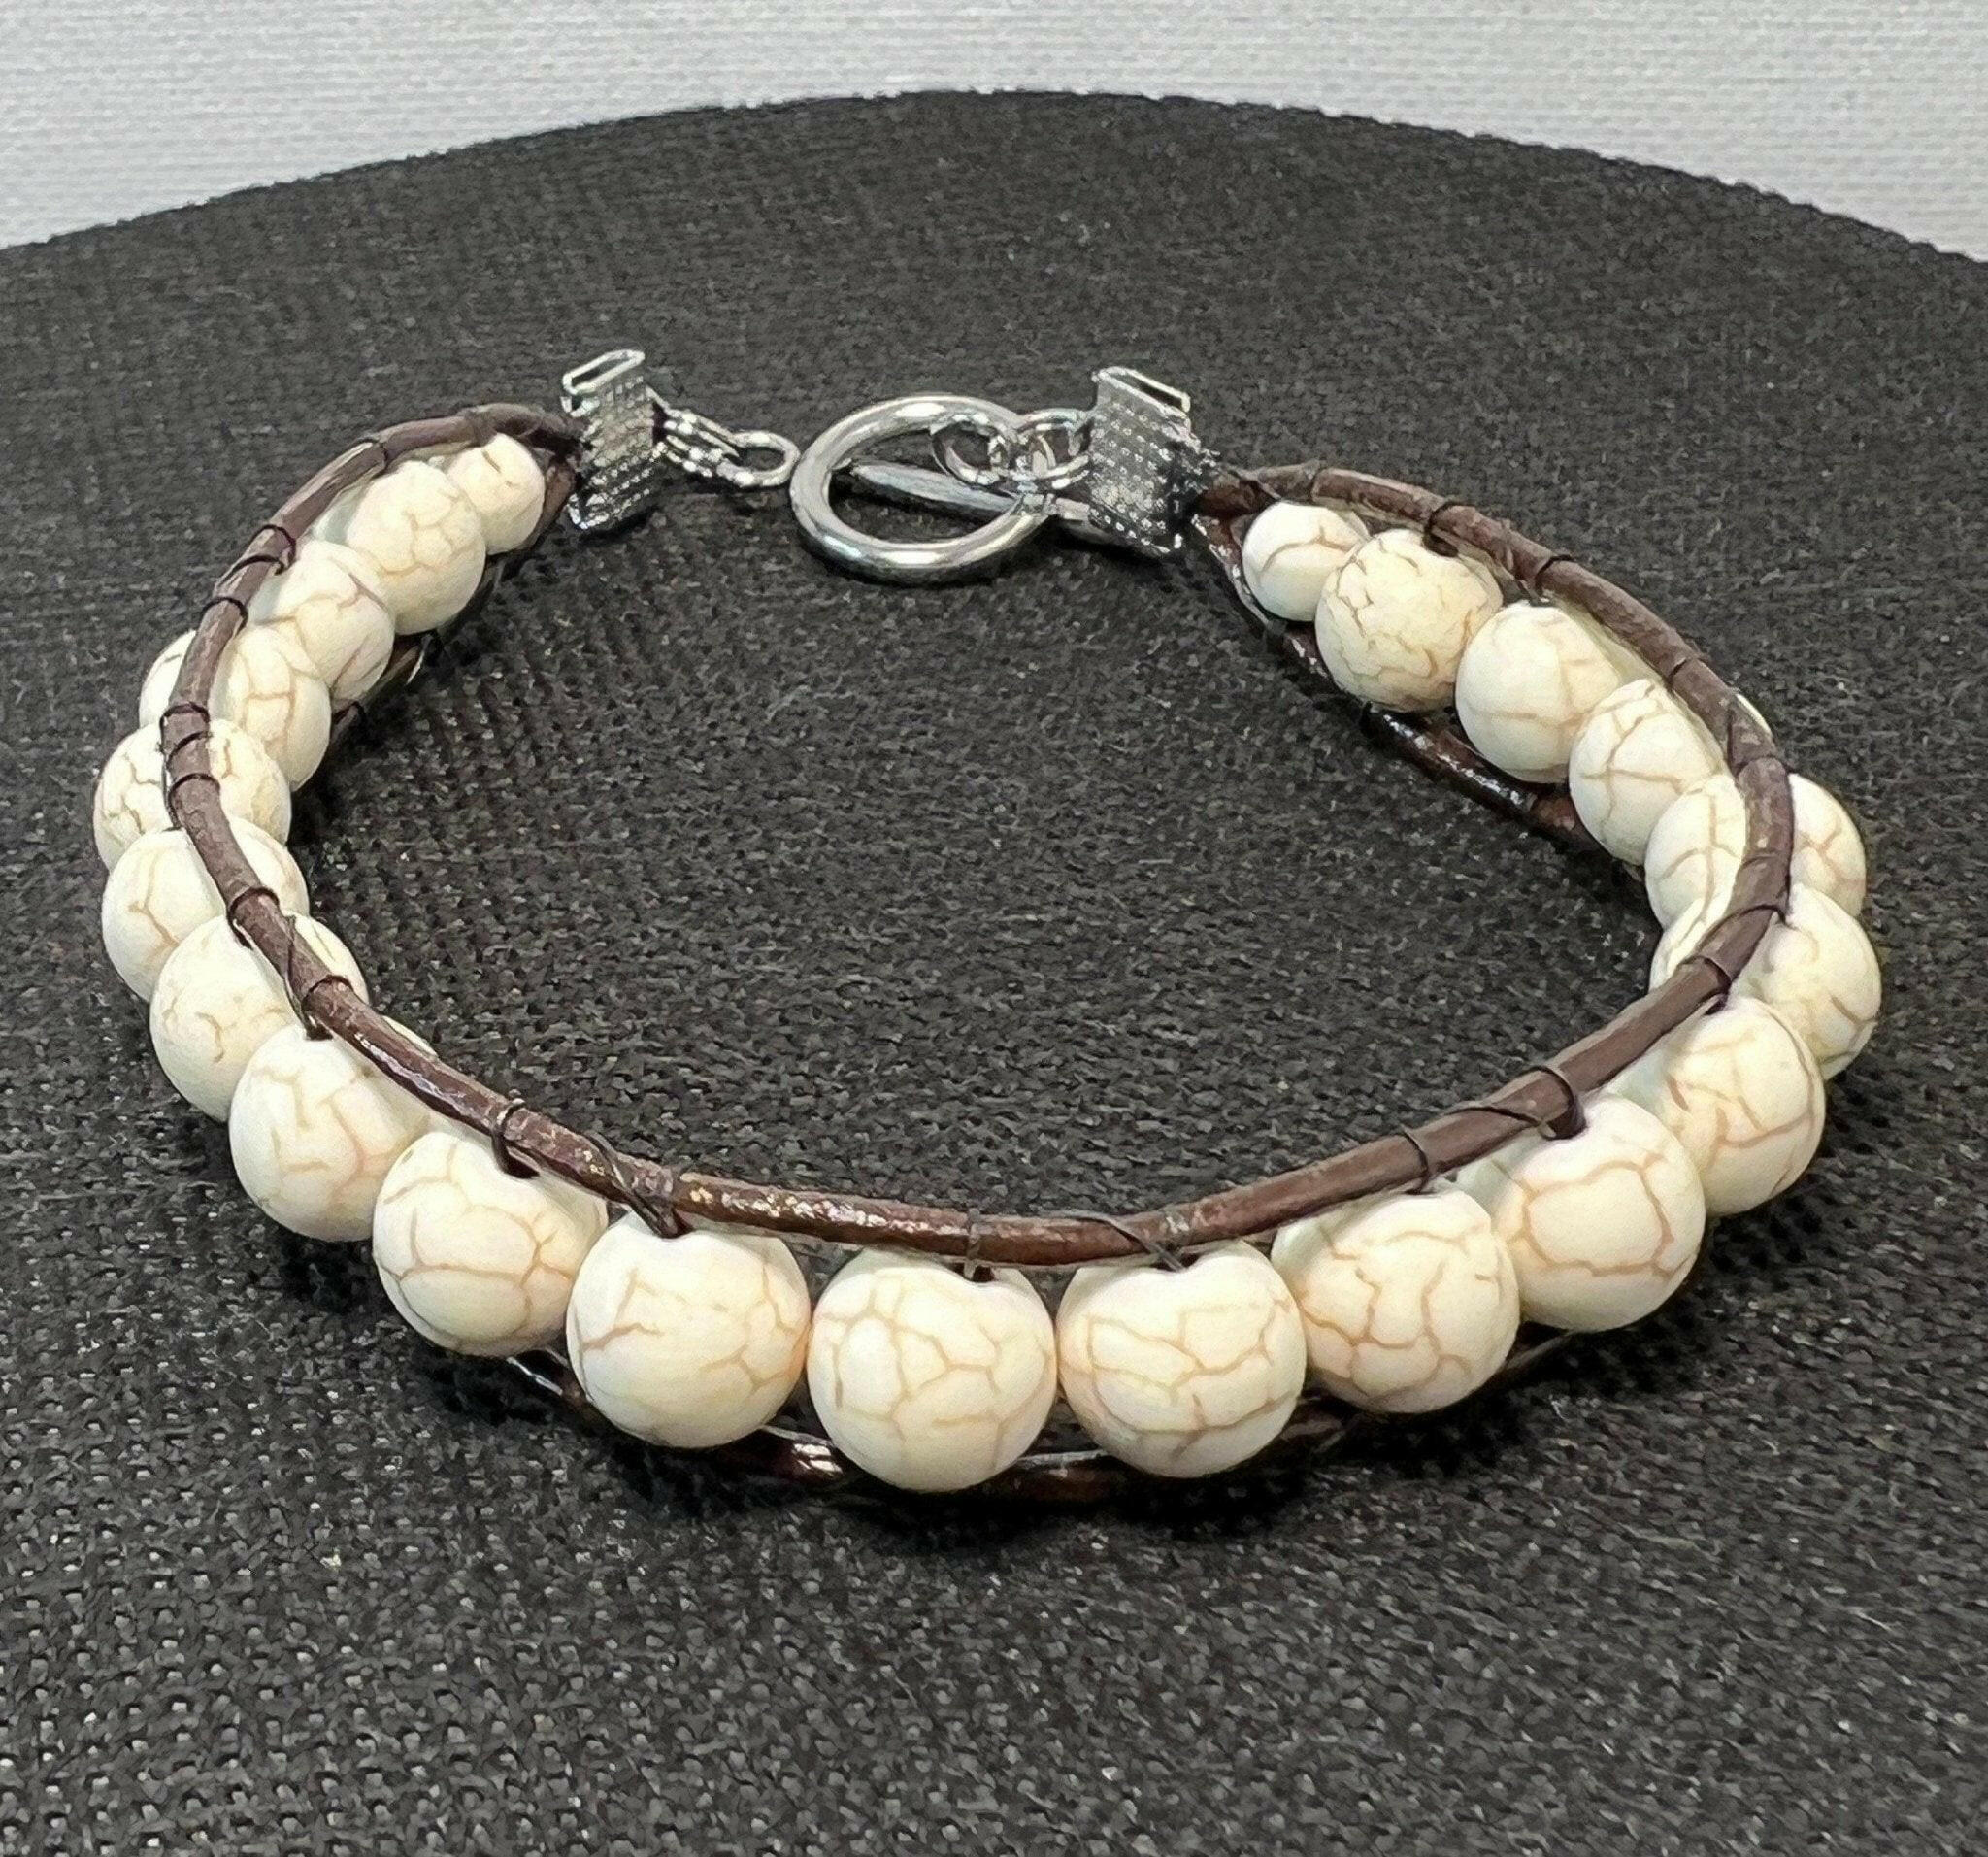 Bec Sue Jewelry Shop bracelet 6.5 / brown/white / leather/turquoise White Turquoise Beaded Bracelet, White Turquoise Bracelet Tags 363